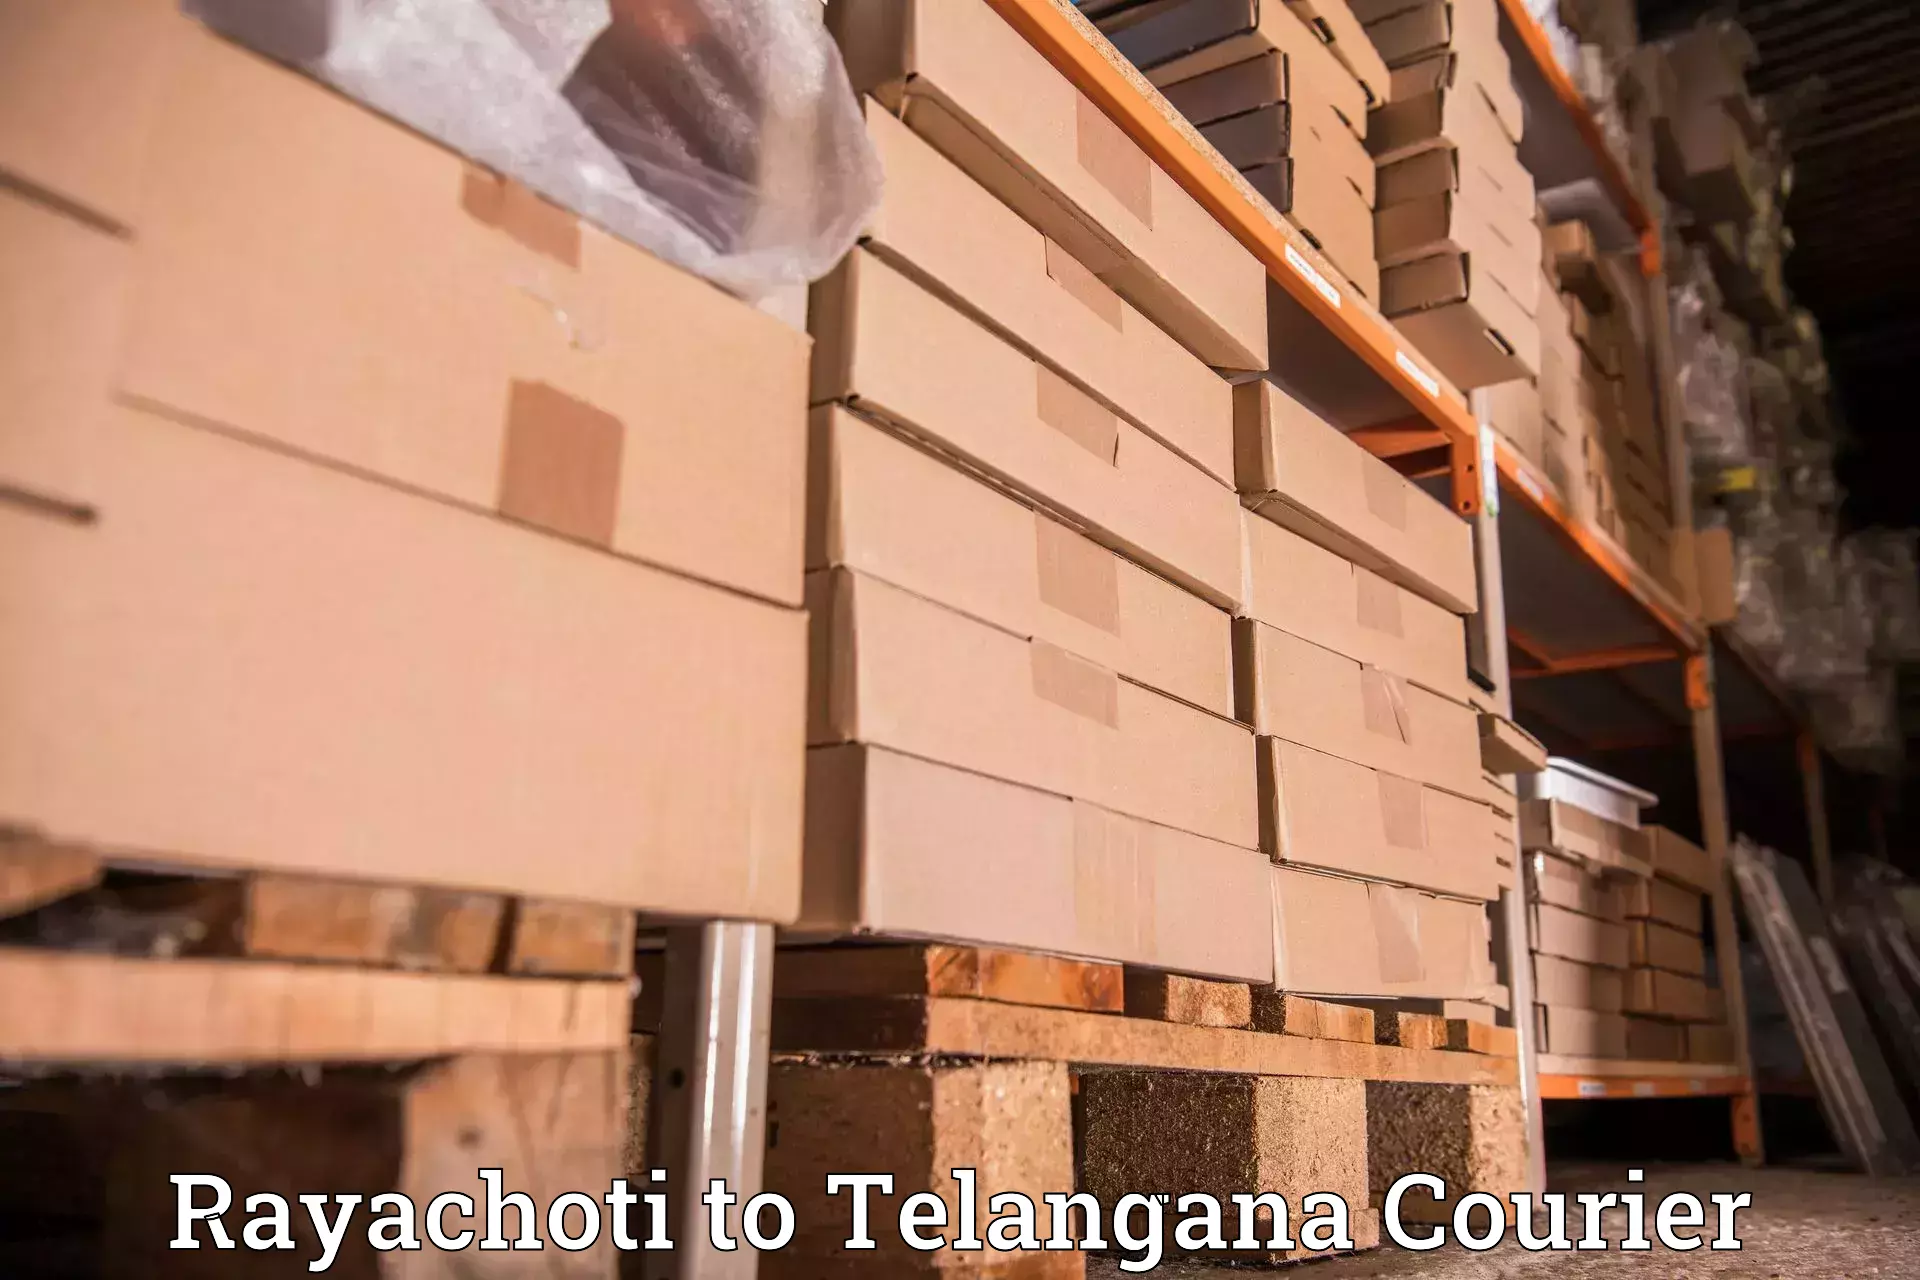 Easy access courier services Rayachoti to Nalgonda